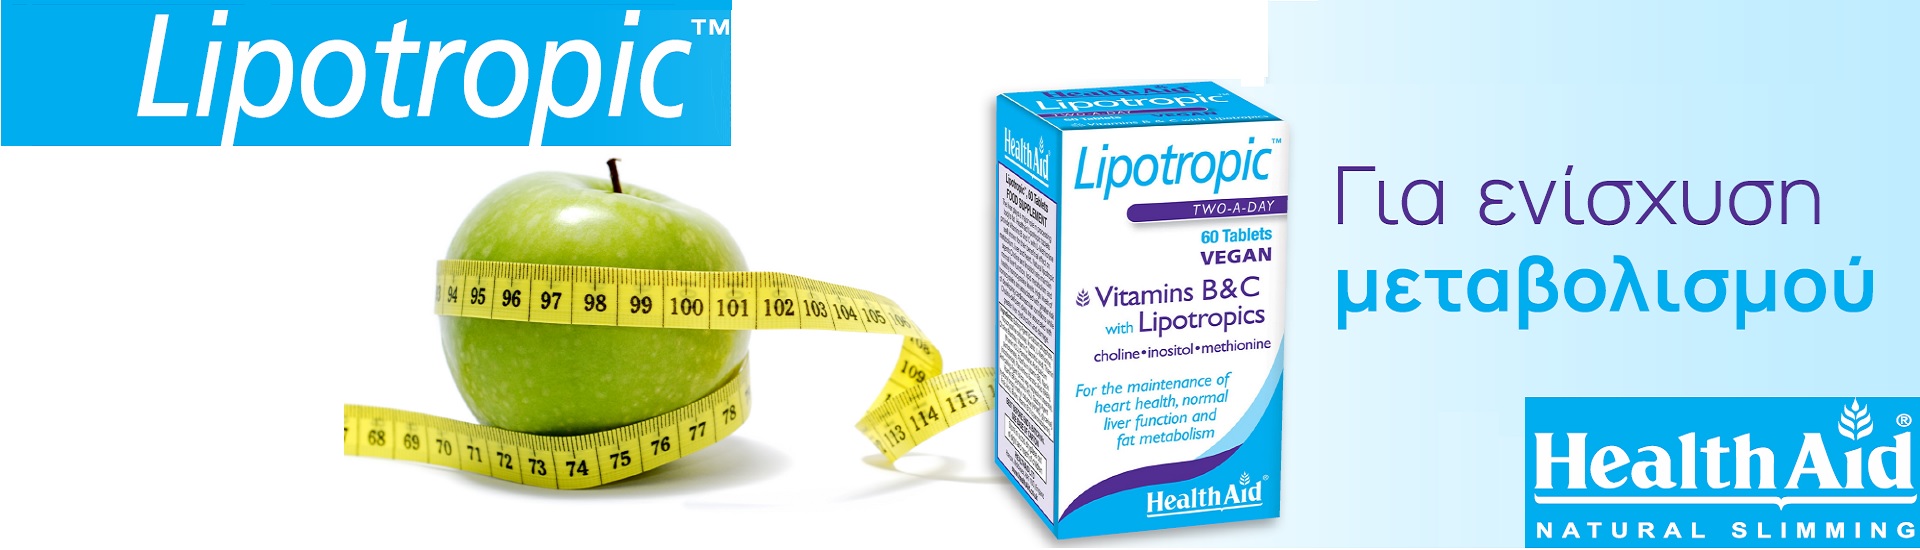 Lipotropic health aid